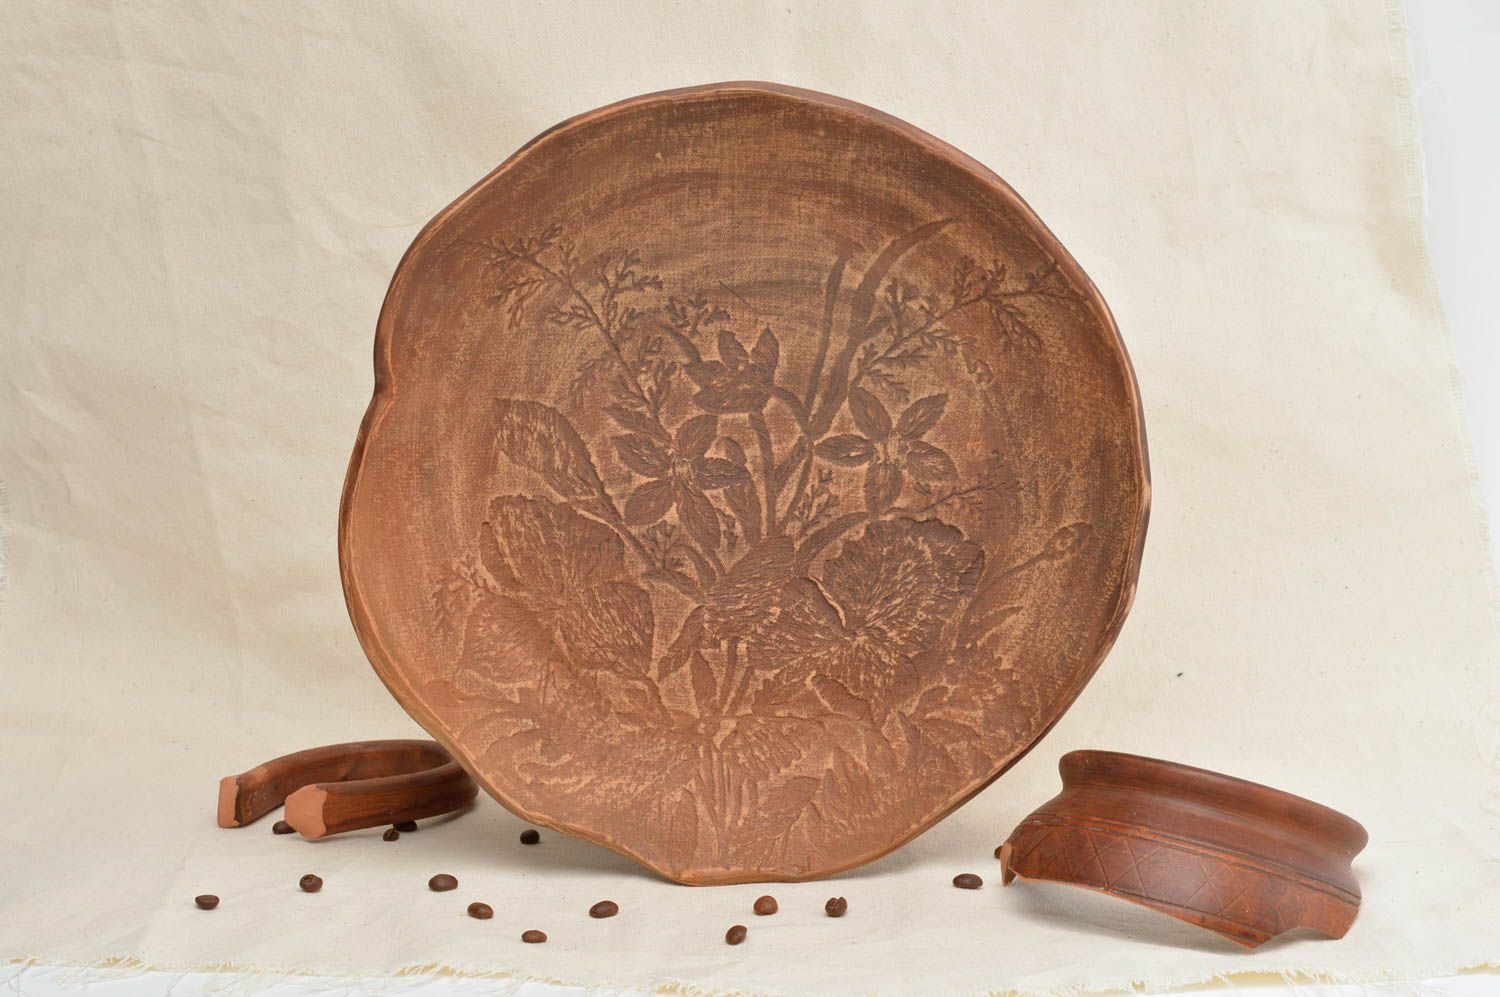 Beautiful handmade ceramic plate unusual clay plate table setting kitchen design photo 1